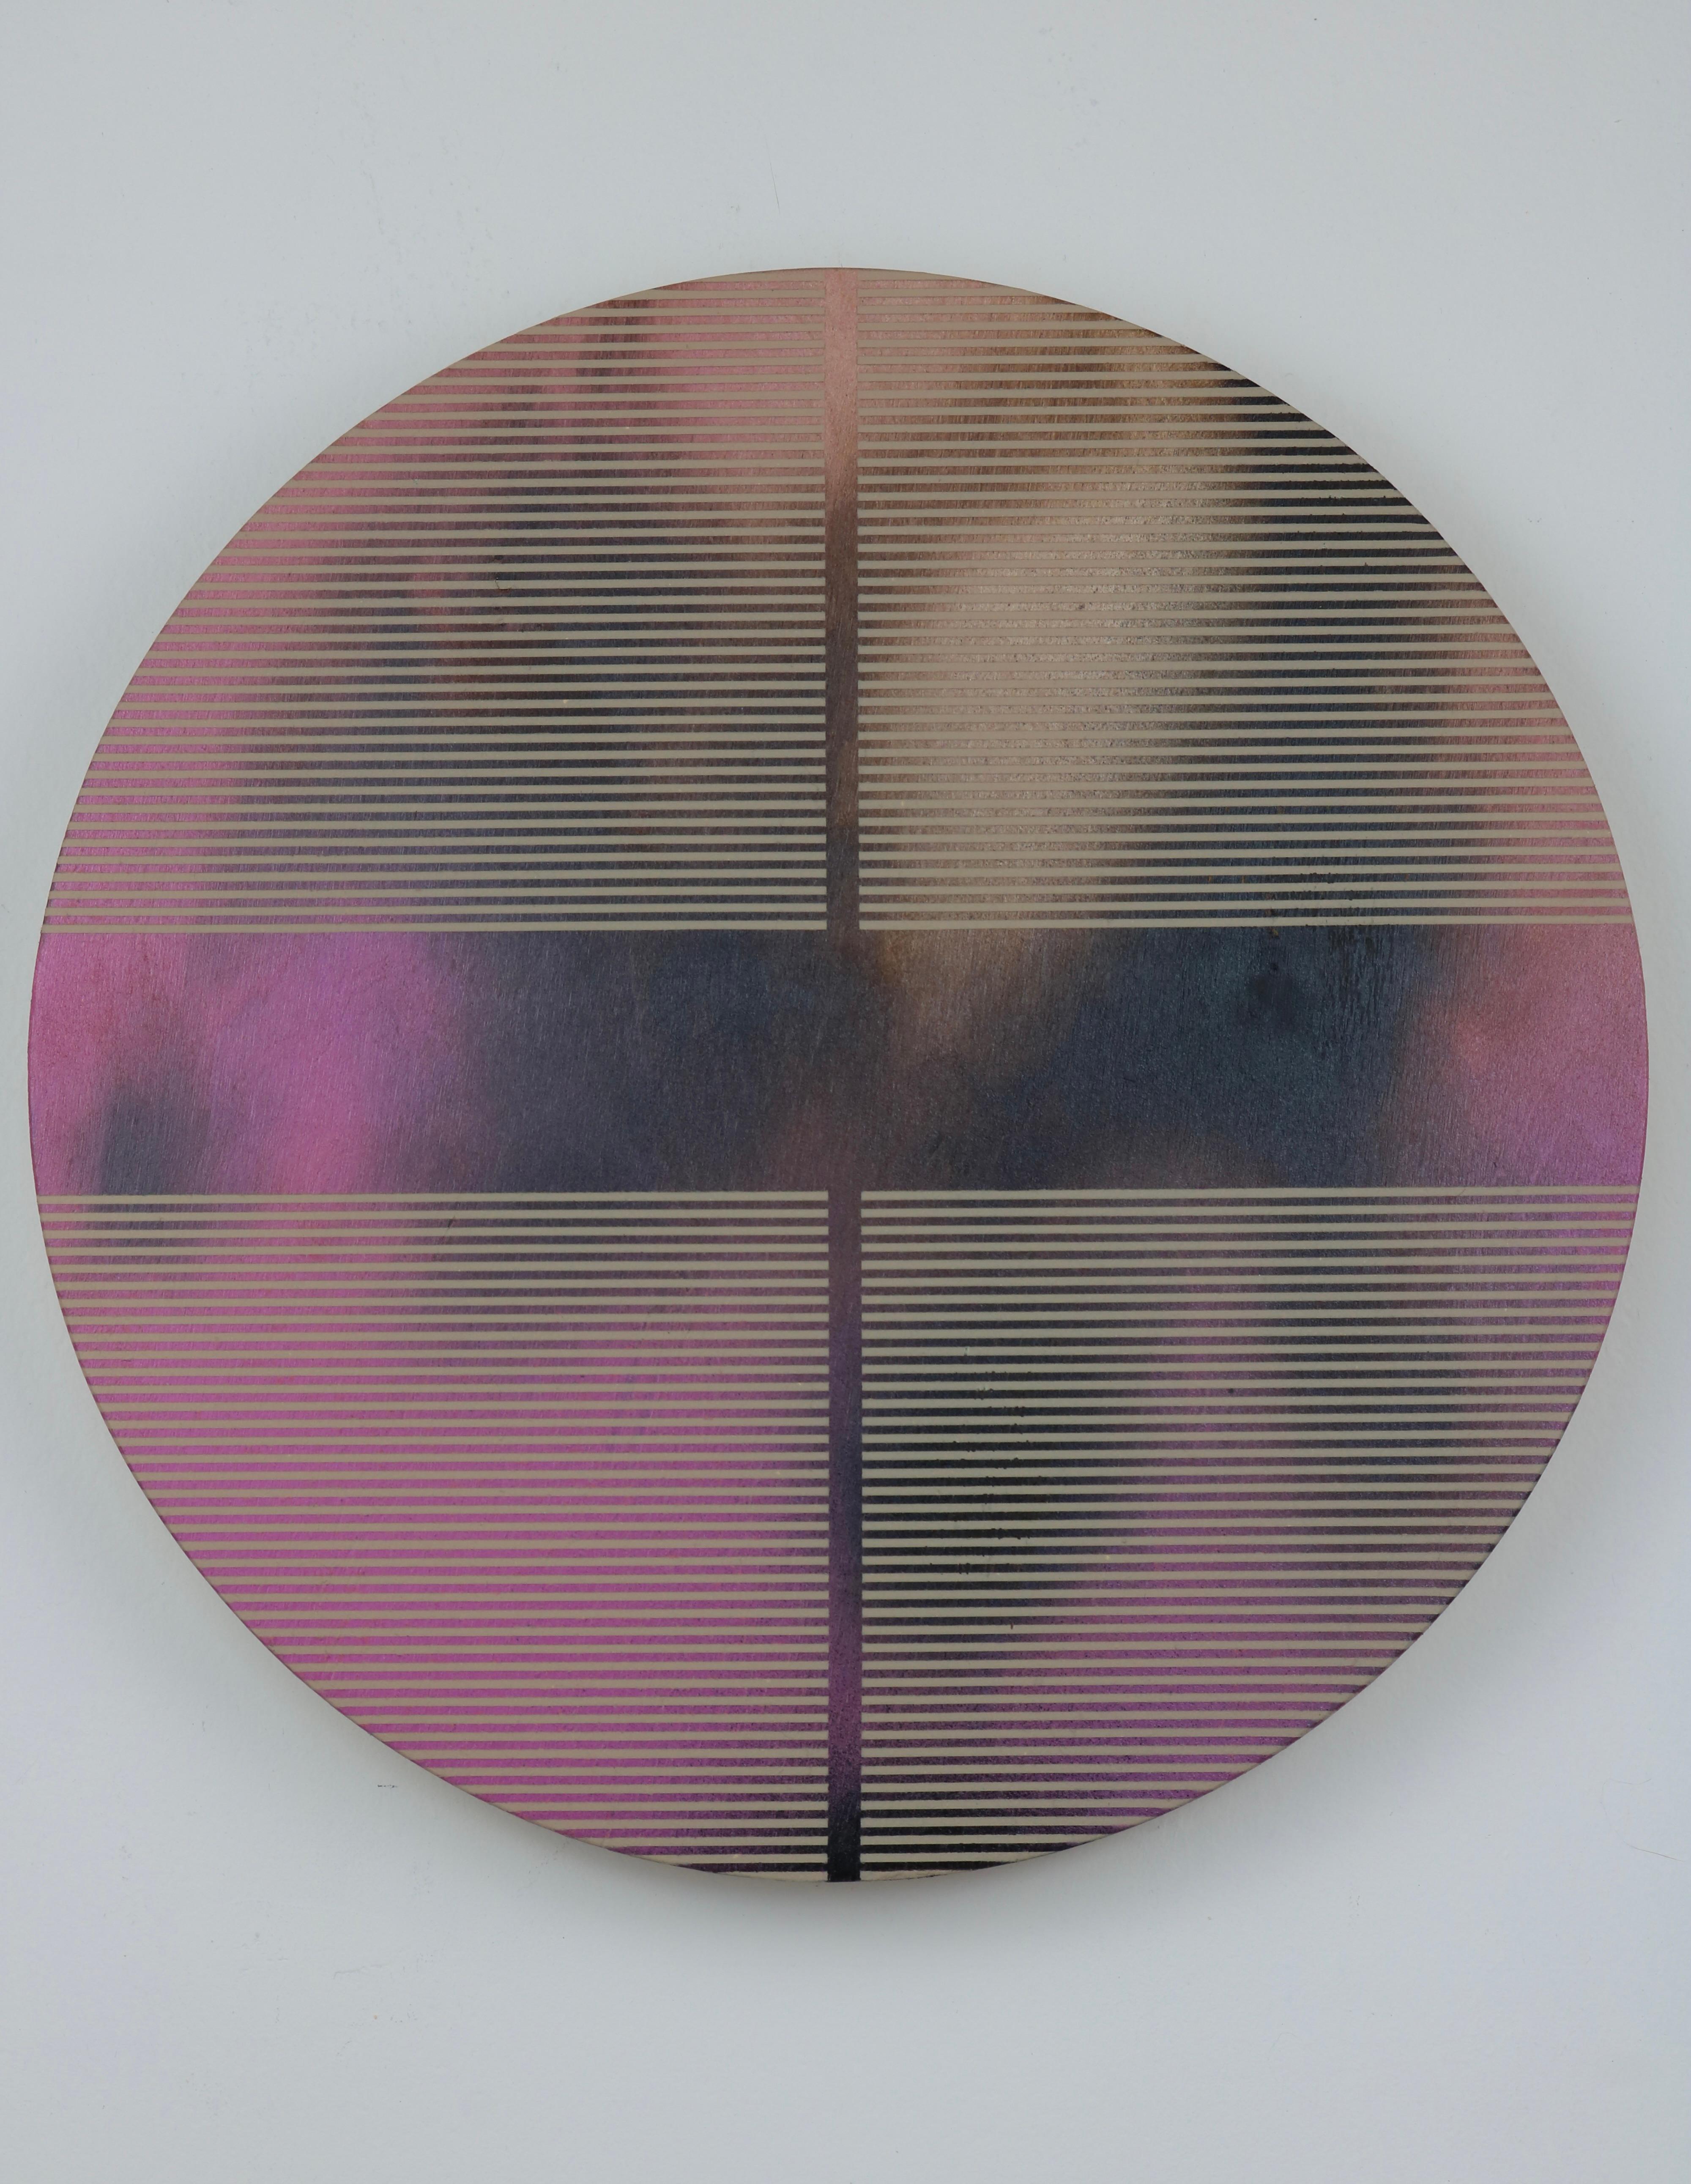 Fuchsia pill (minimaliste grid round painting on wood dopamine art) - Mixed Media Art by Melisa Taylor Metzger